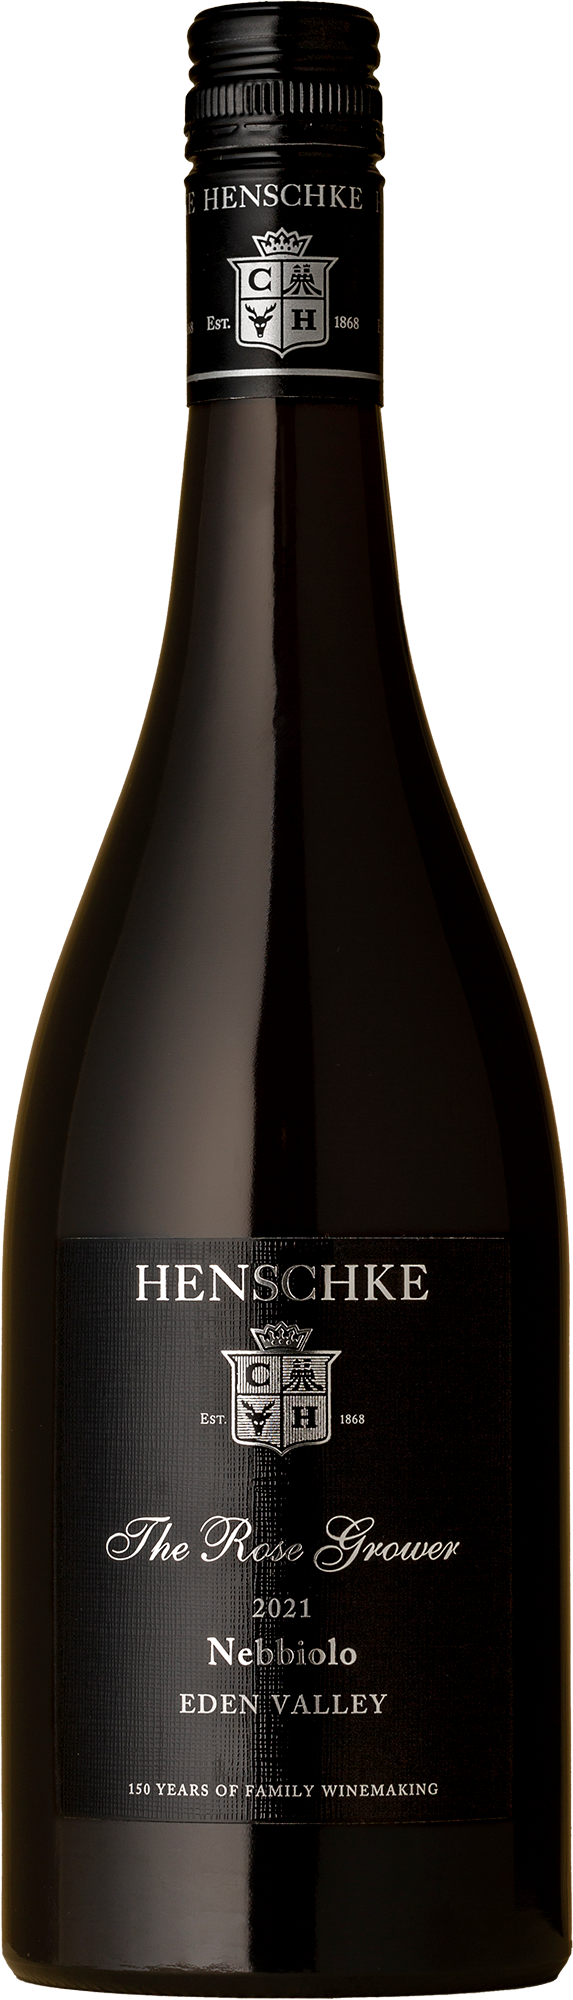 Henschke - The Rose Grower Nebbiolo 2021 Red Wine